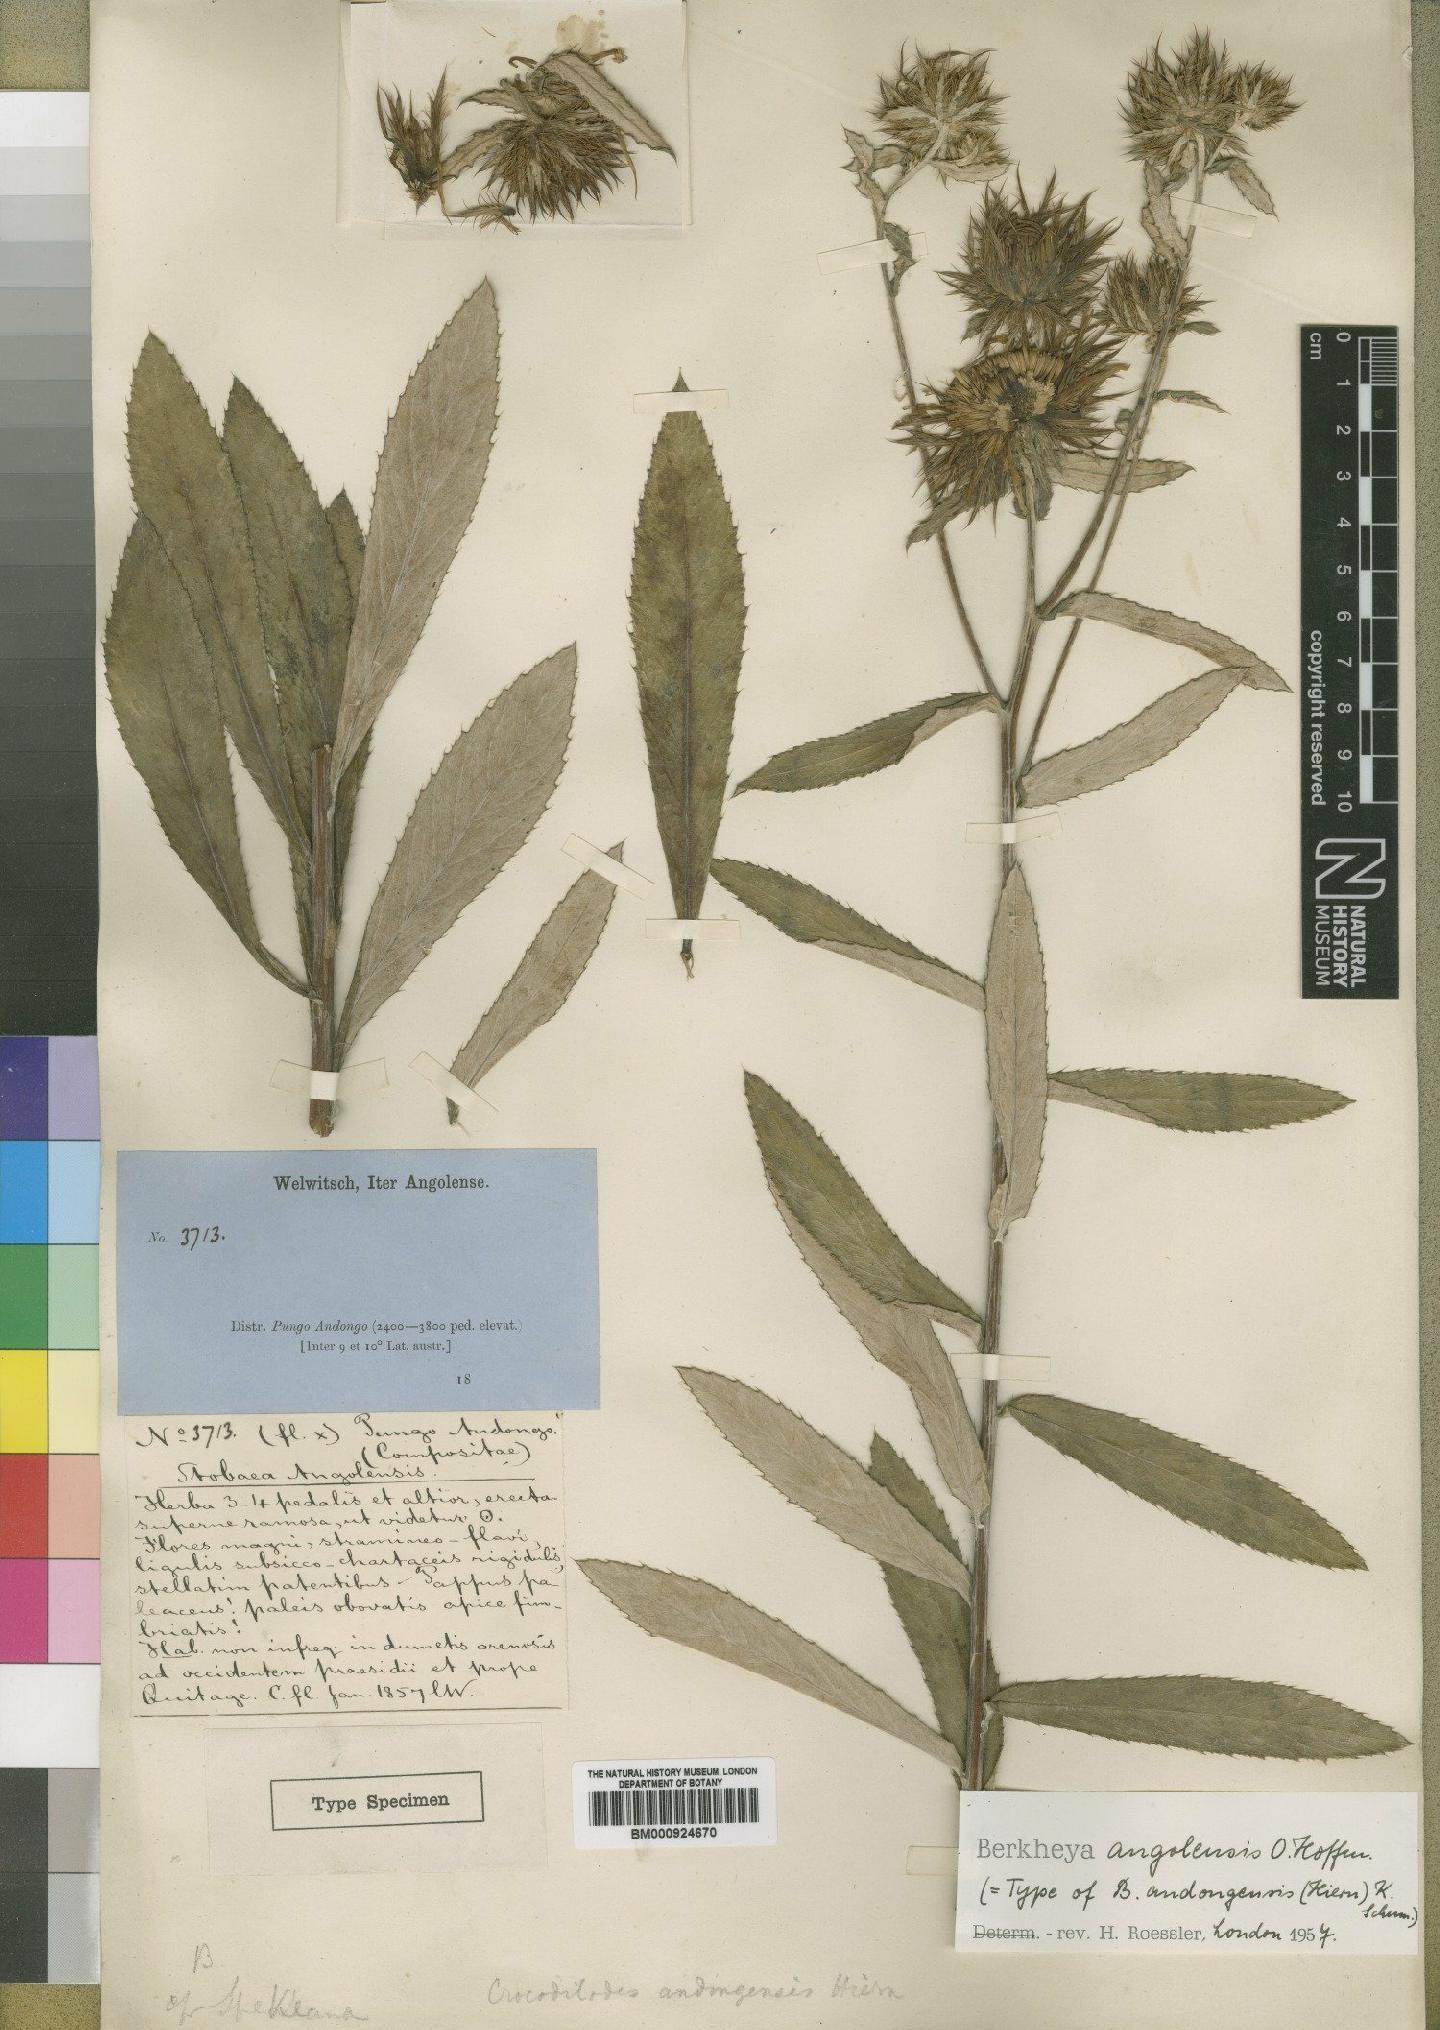 To NHMUK collection (Berkheya angolensis O.Hoffm.; Type; NHMUK:ecatalogue:4553246)